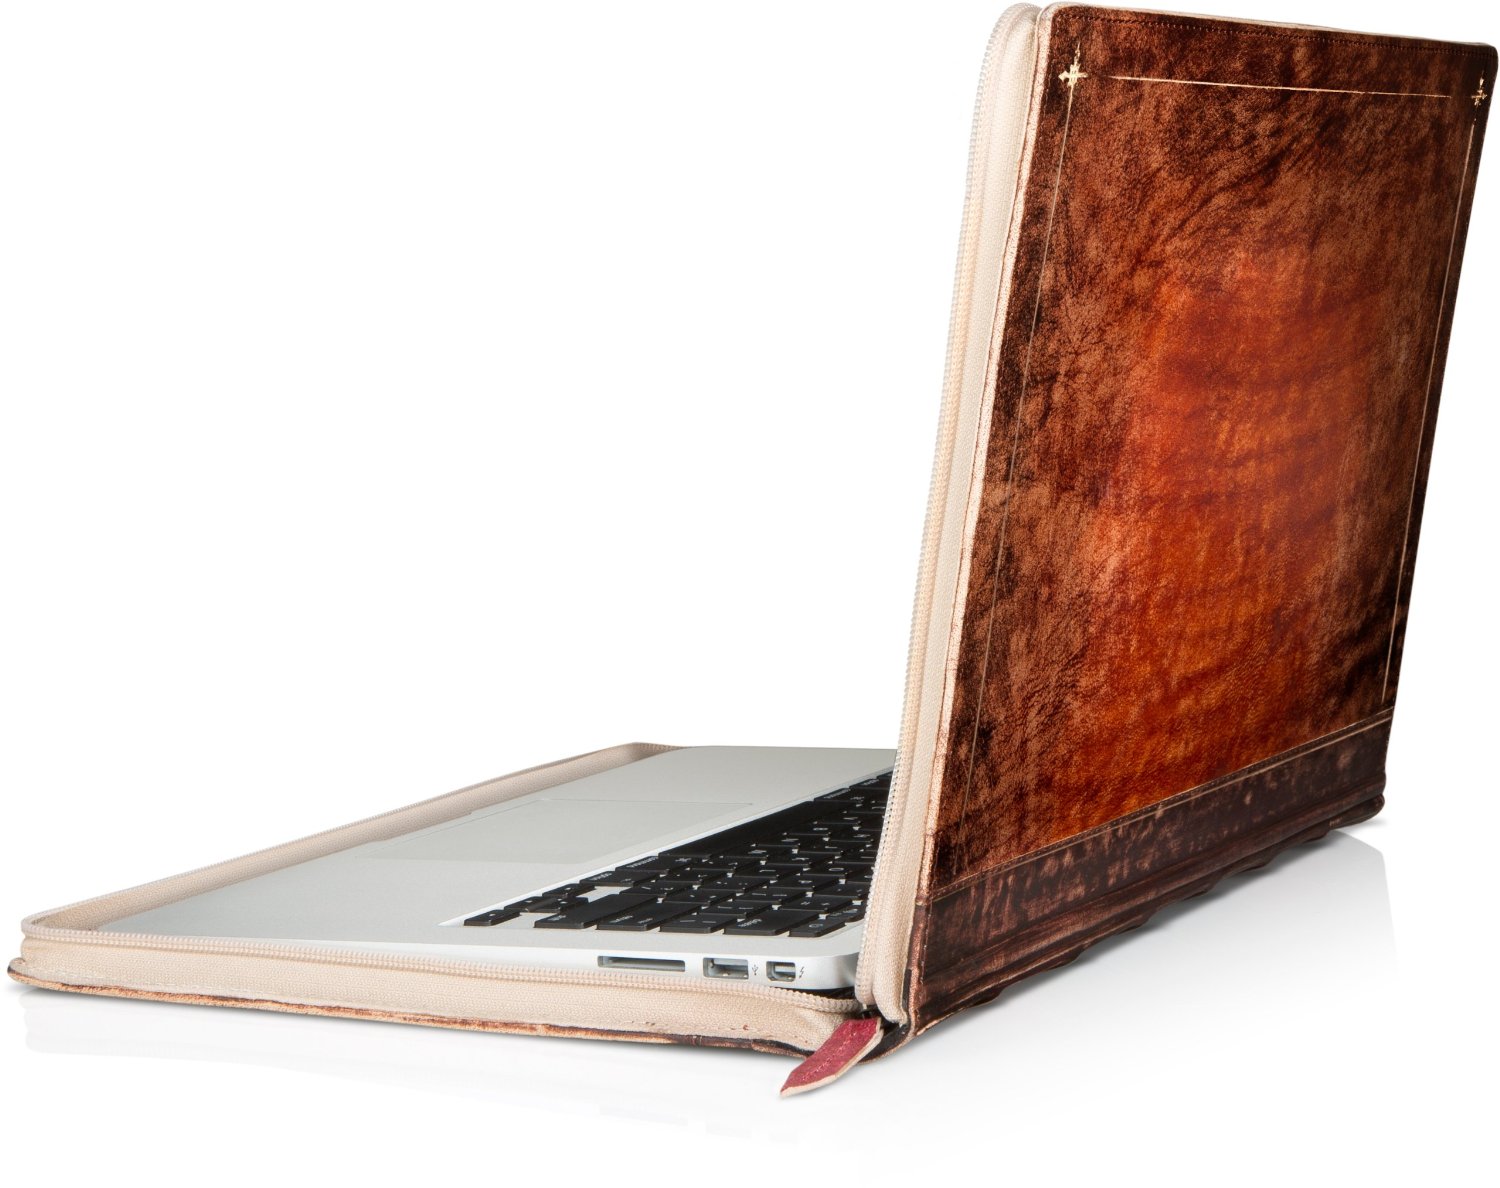 Top 5 Best MacBook Pro Cases, Sleeves, & Covers